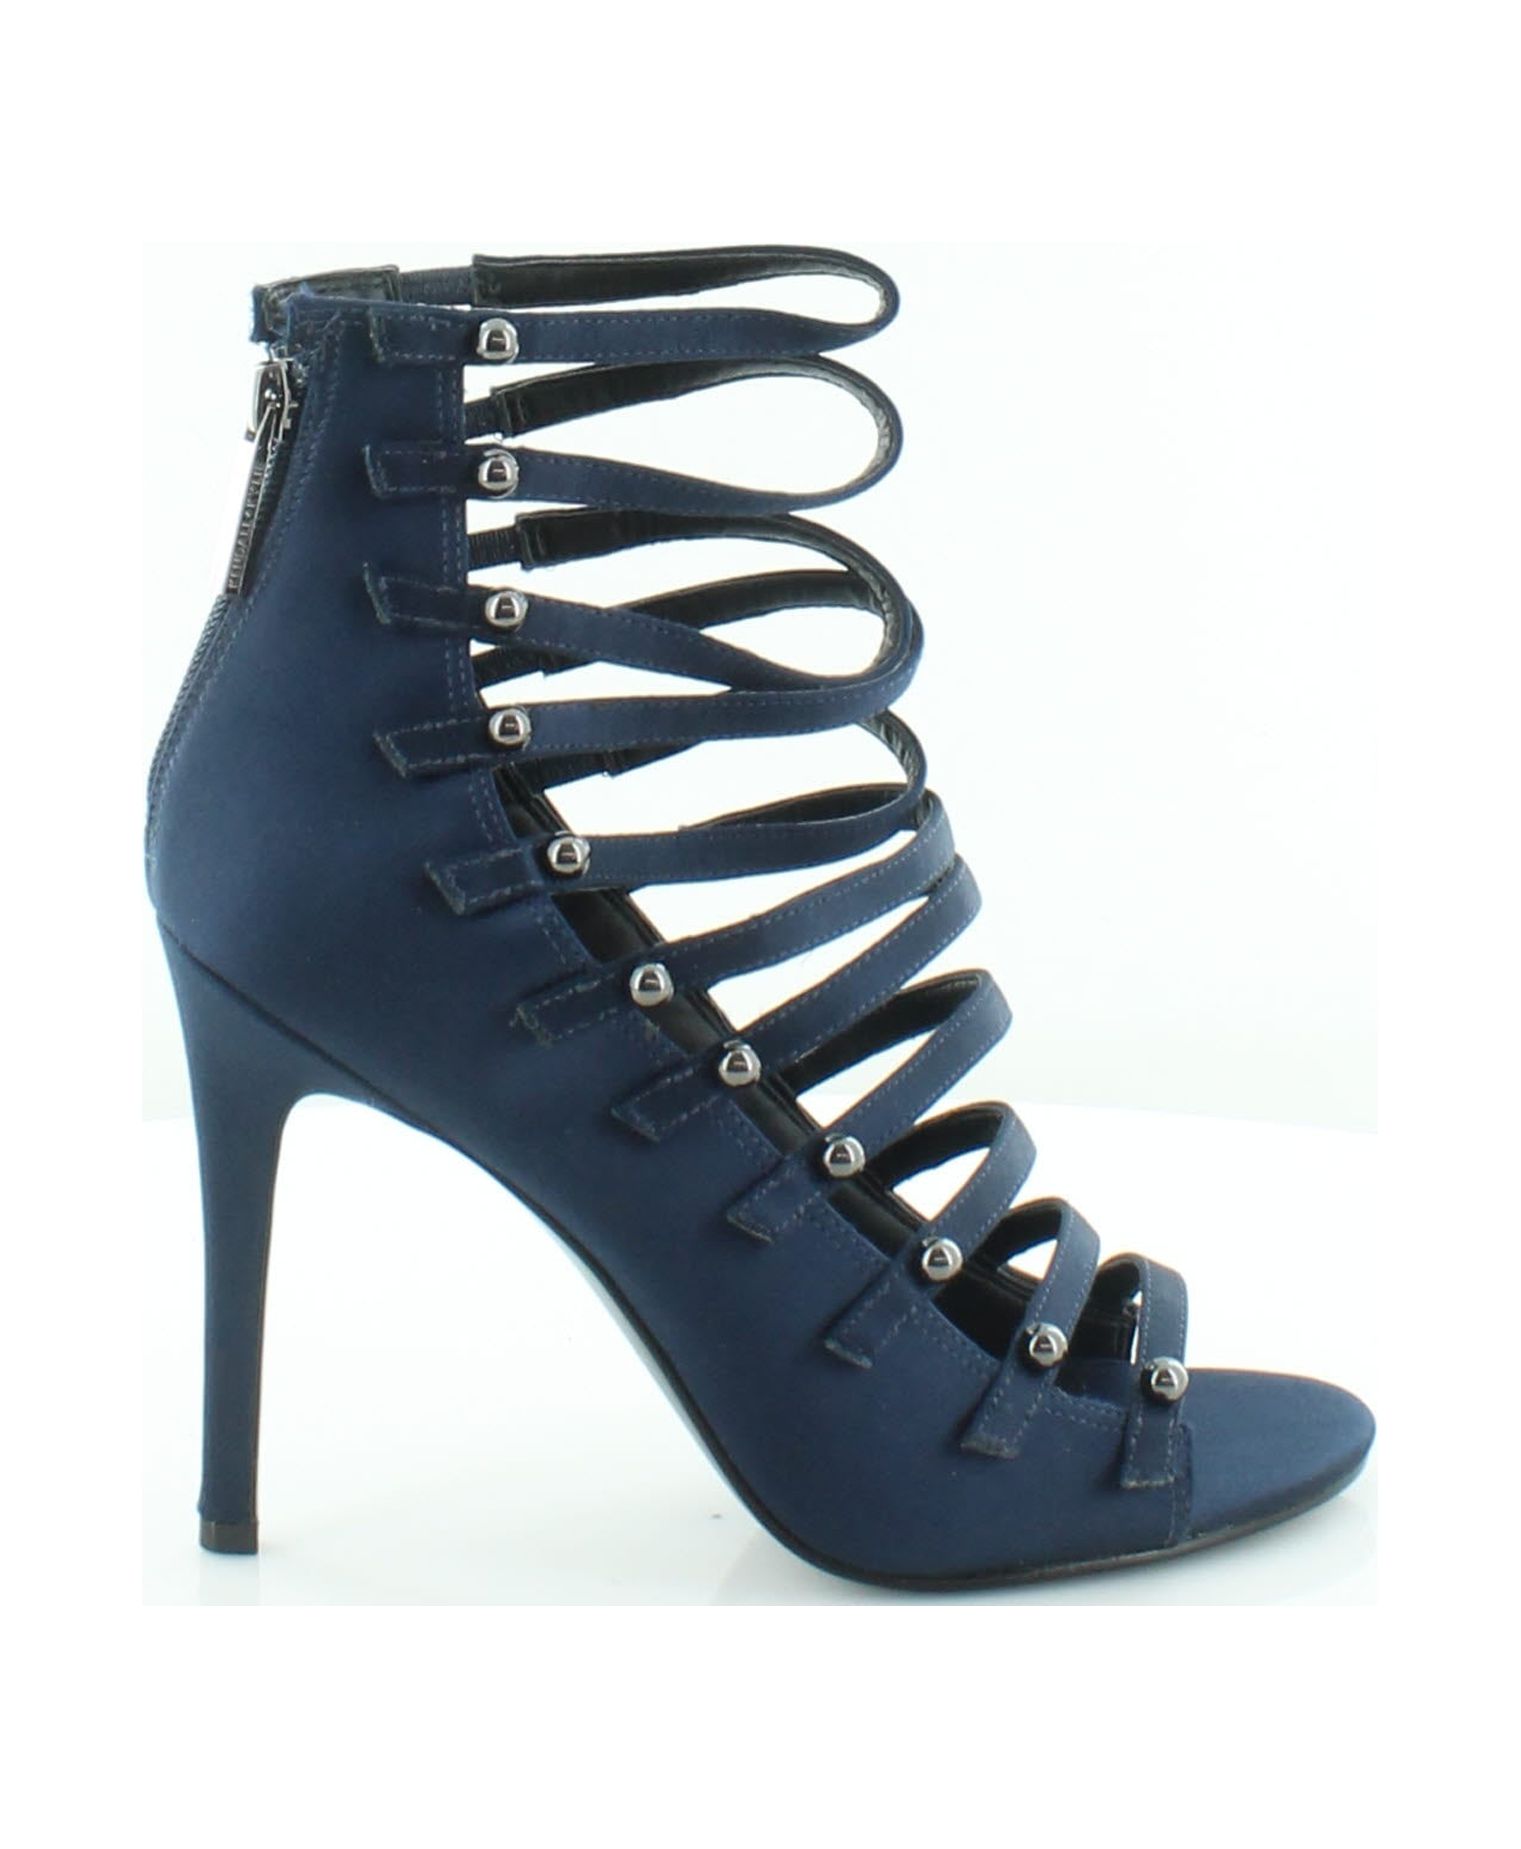 Kendall + Kylie Giaa Women's Heels Dark Blue Size 8.5 M - image 3 of 5